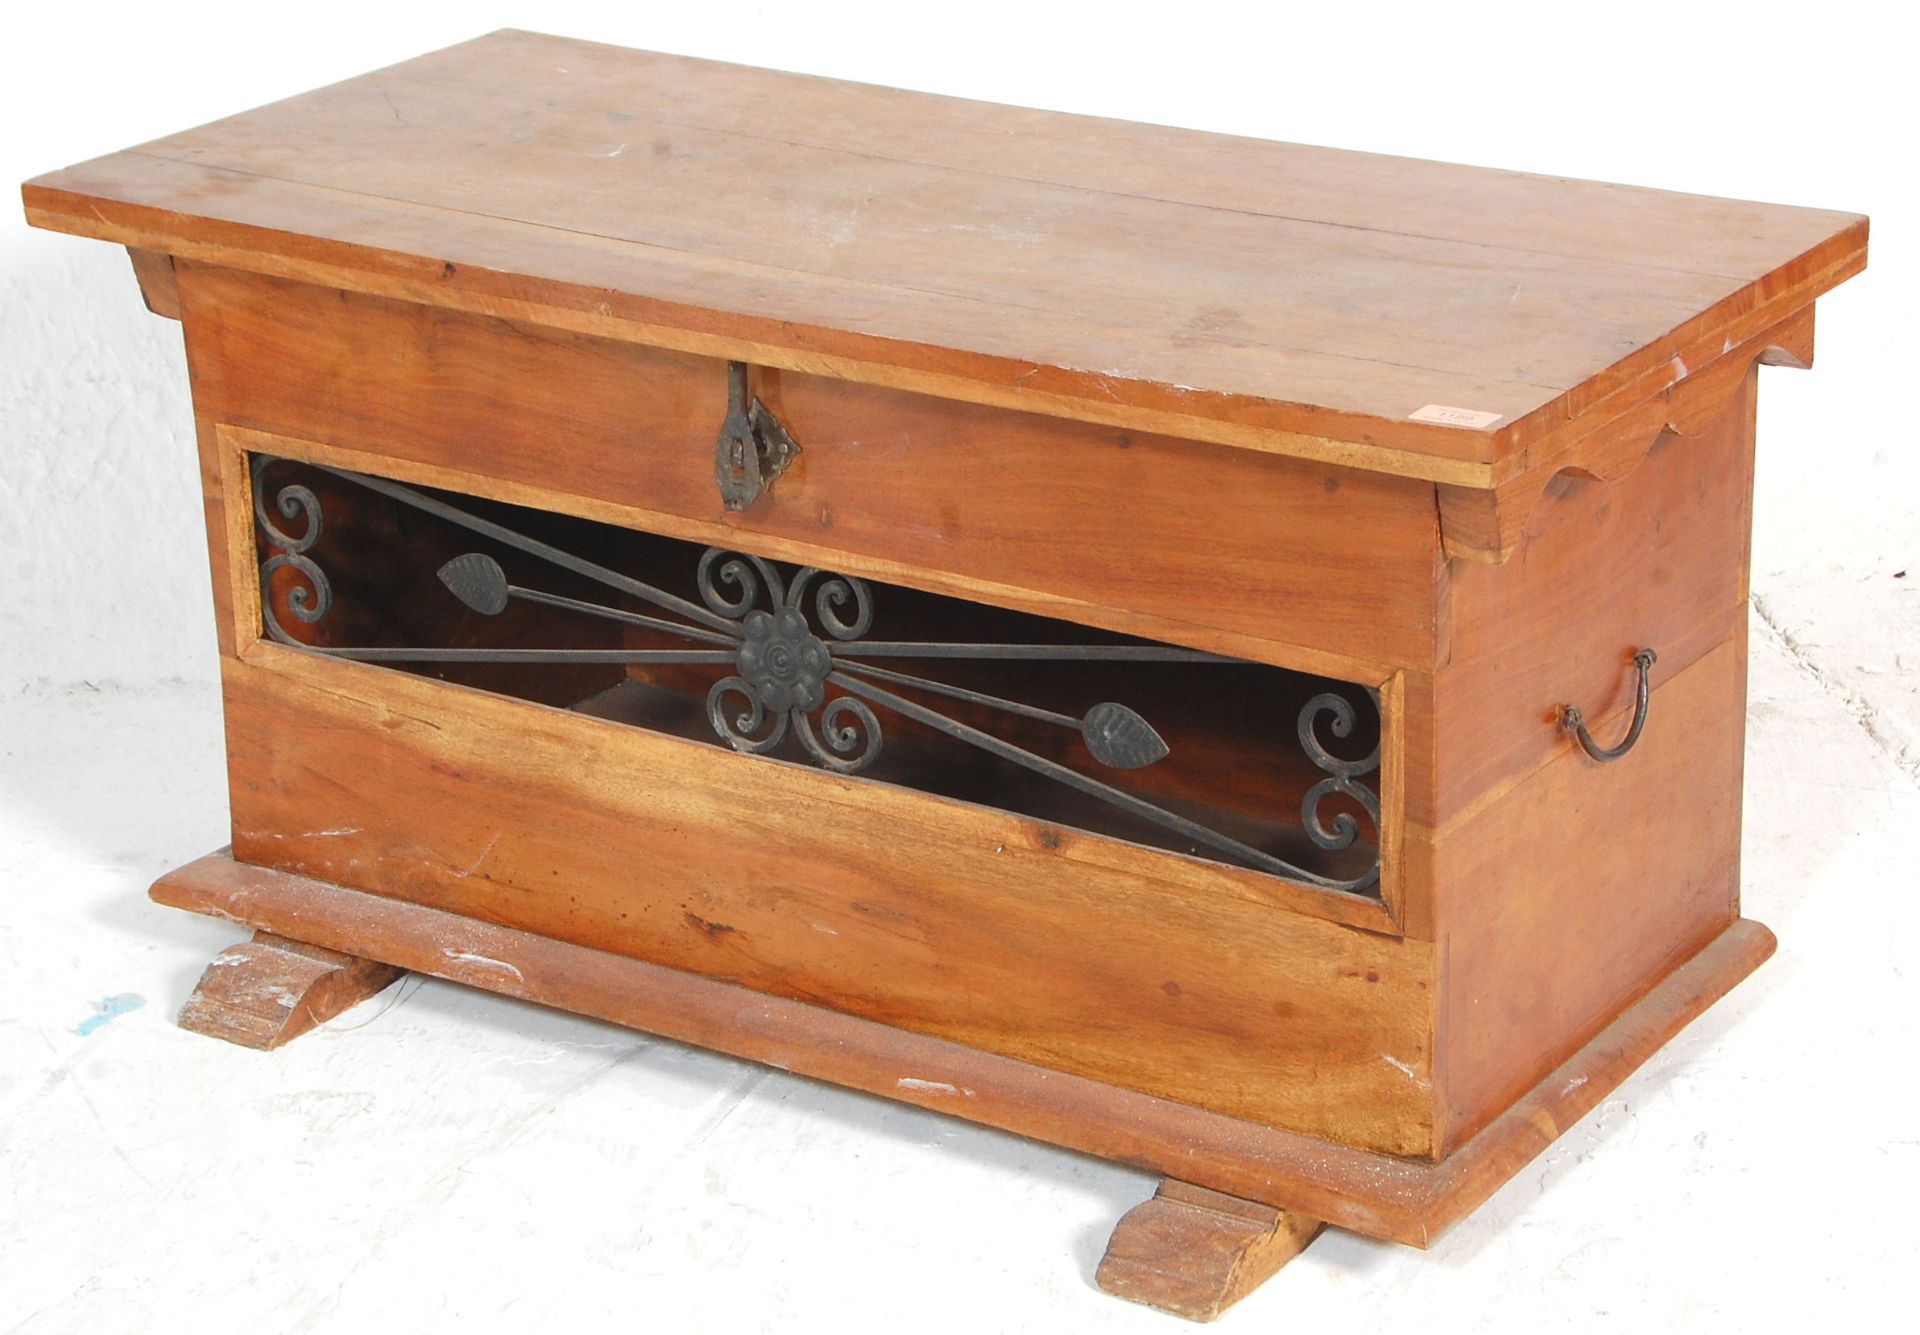 An unusual 20th century decorative hardwood Spanish Armada inspired casssone coffee table / - Image 5 of 7